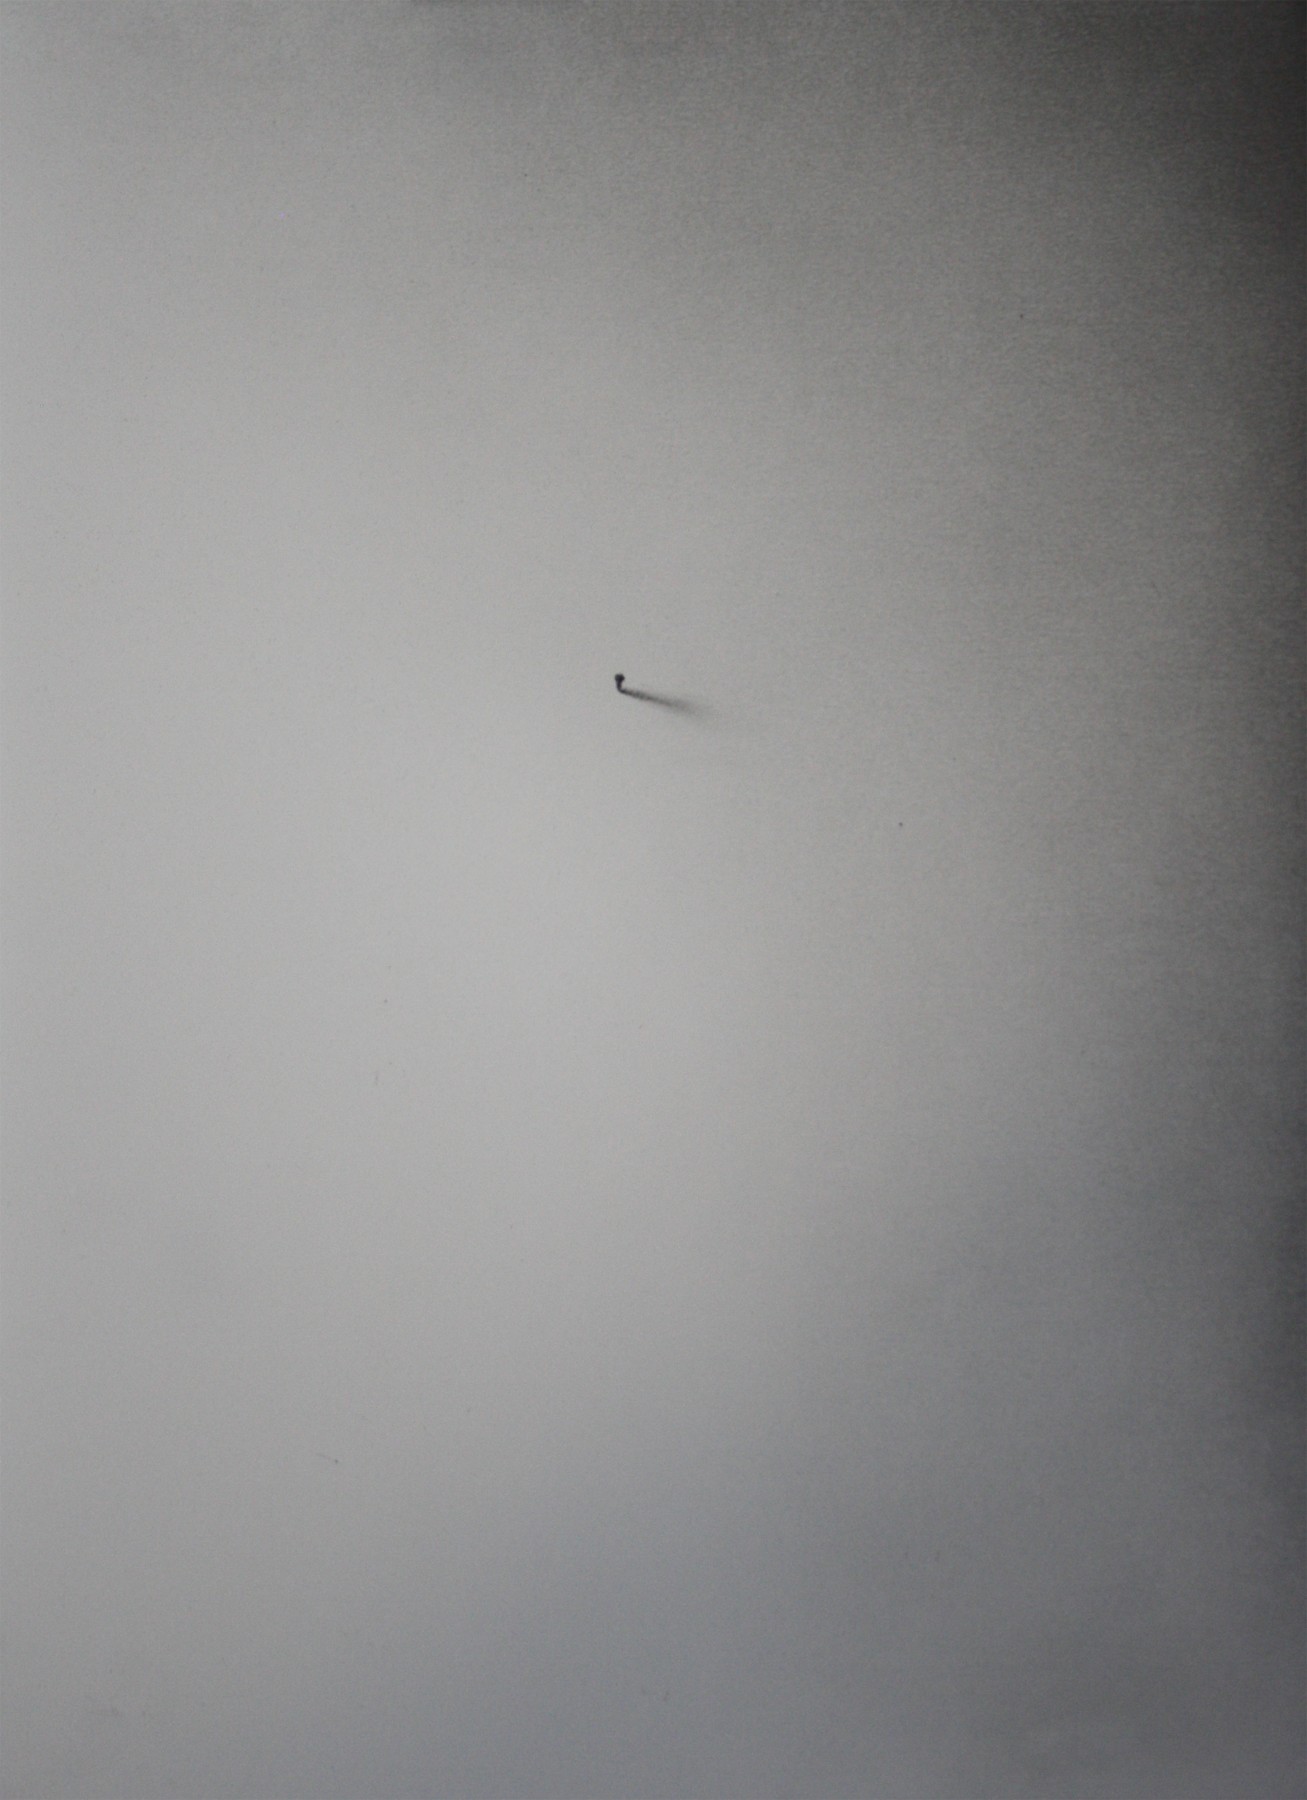 Simon Schubert, Untitled (One Nail), 2017